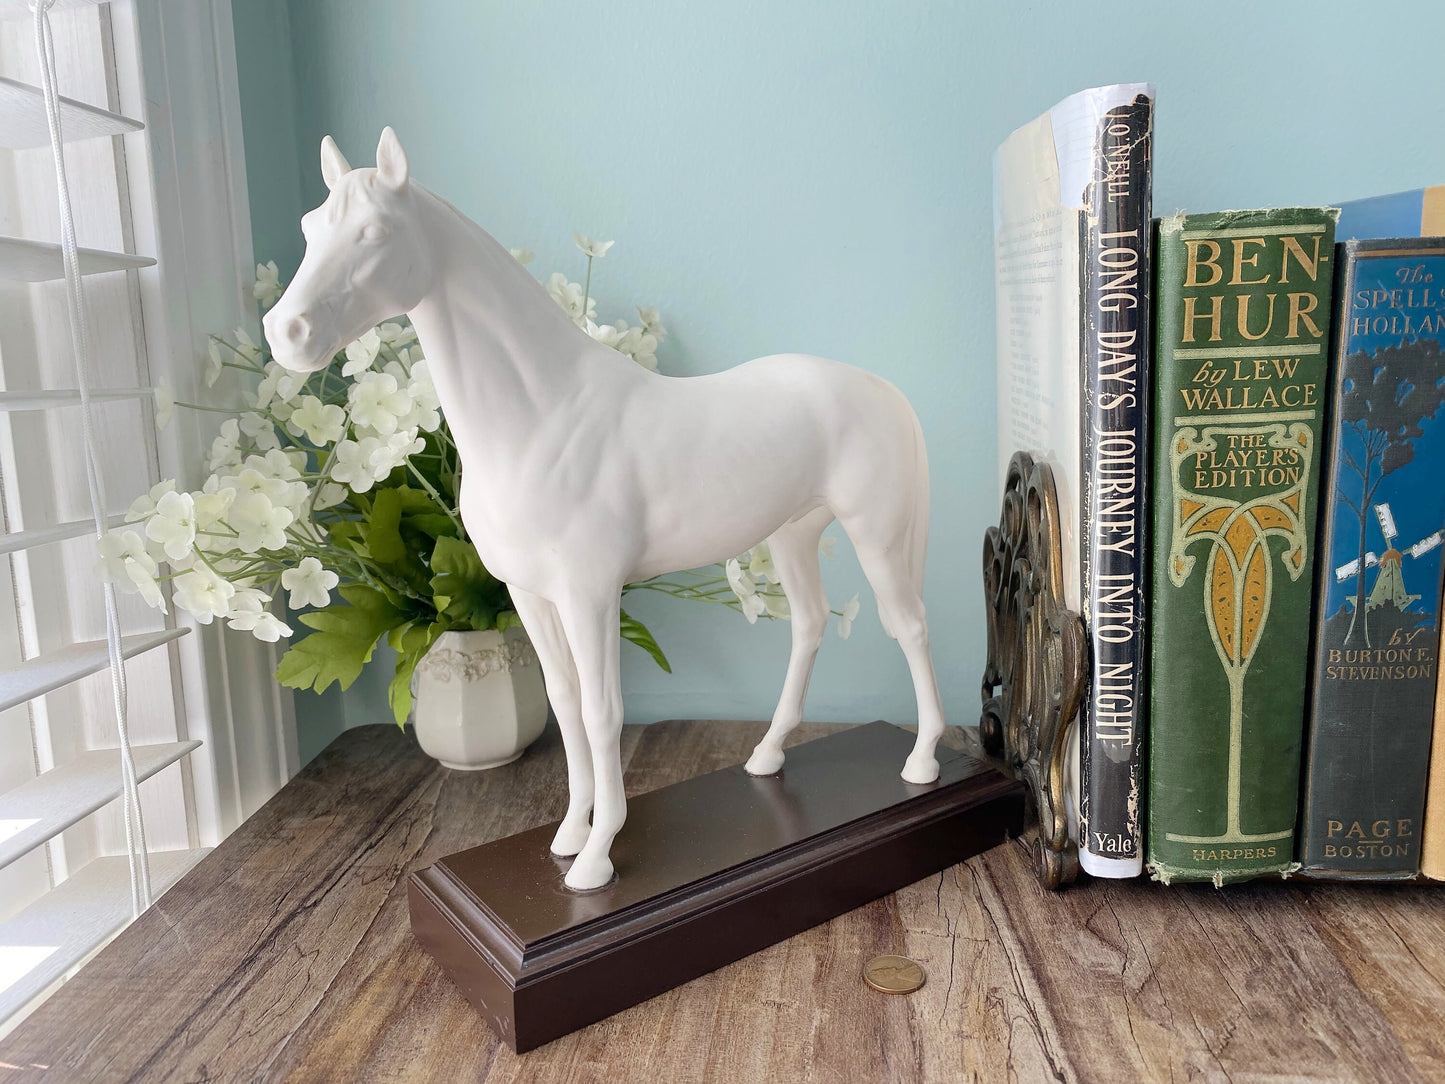 Vintage Goebel Horse Figurine Mounted on Wood Made in West Germany